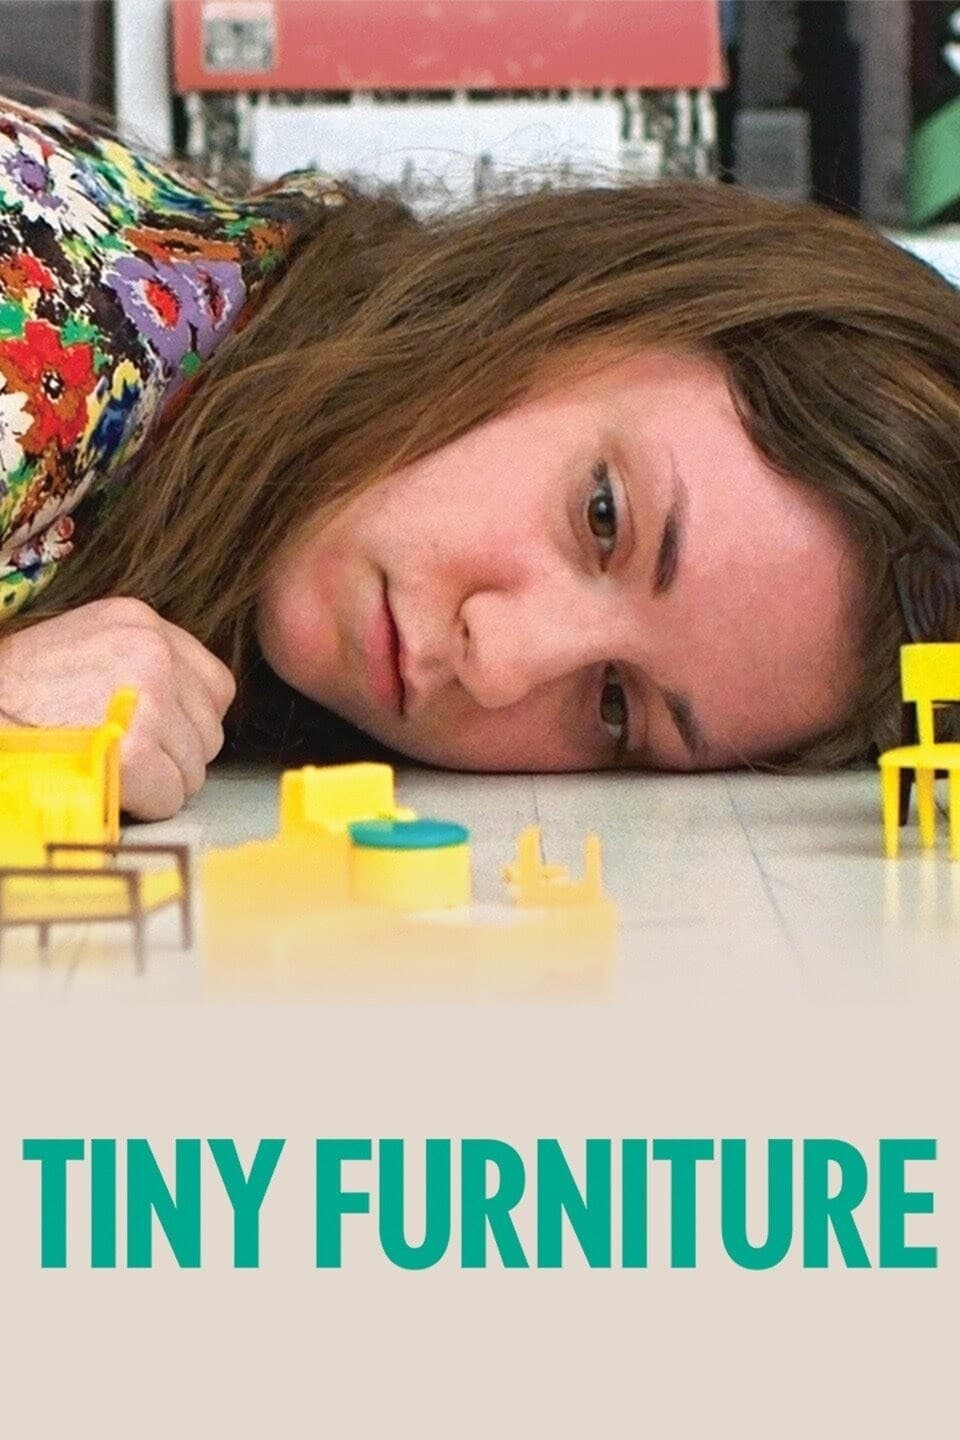 Tiny Furniture [Sub-ITA] (2010)